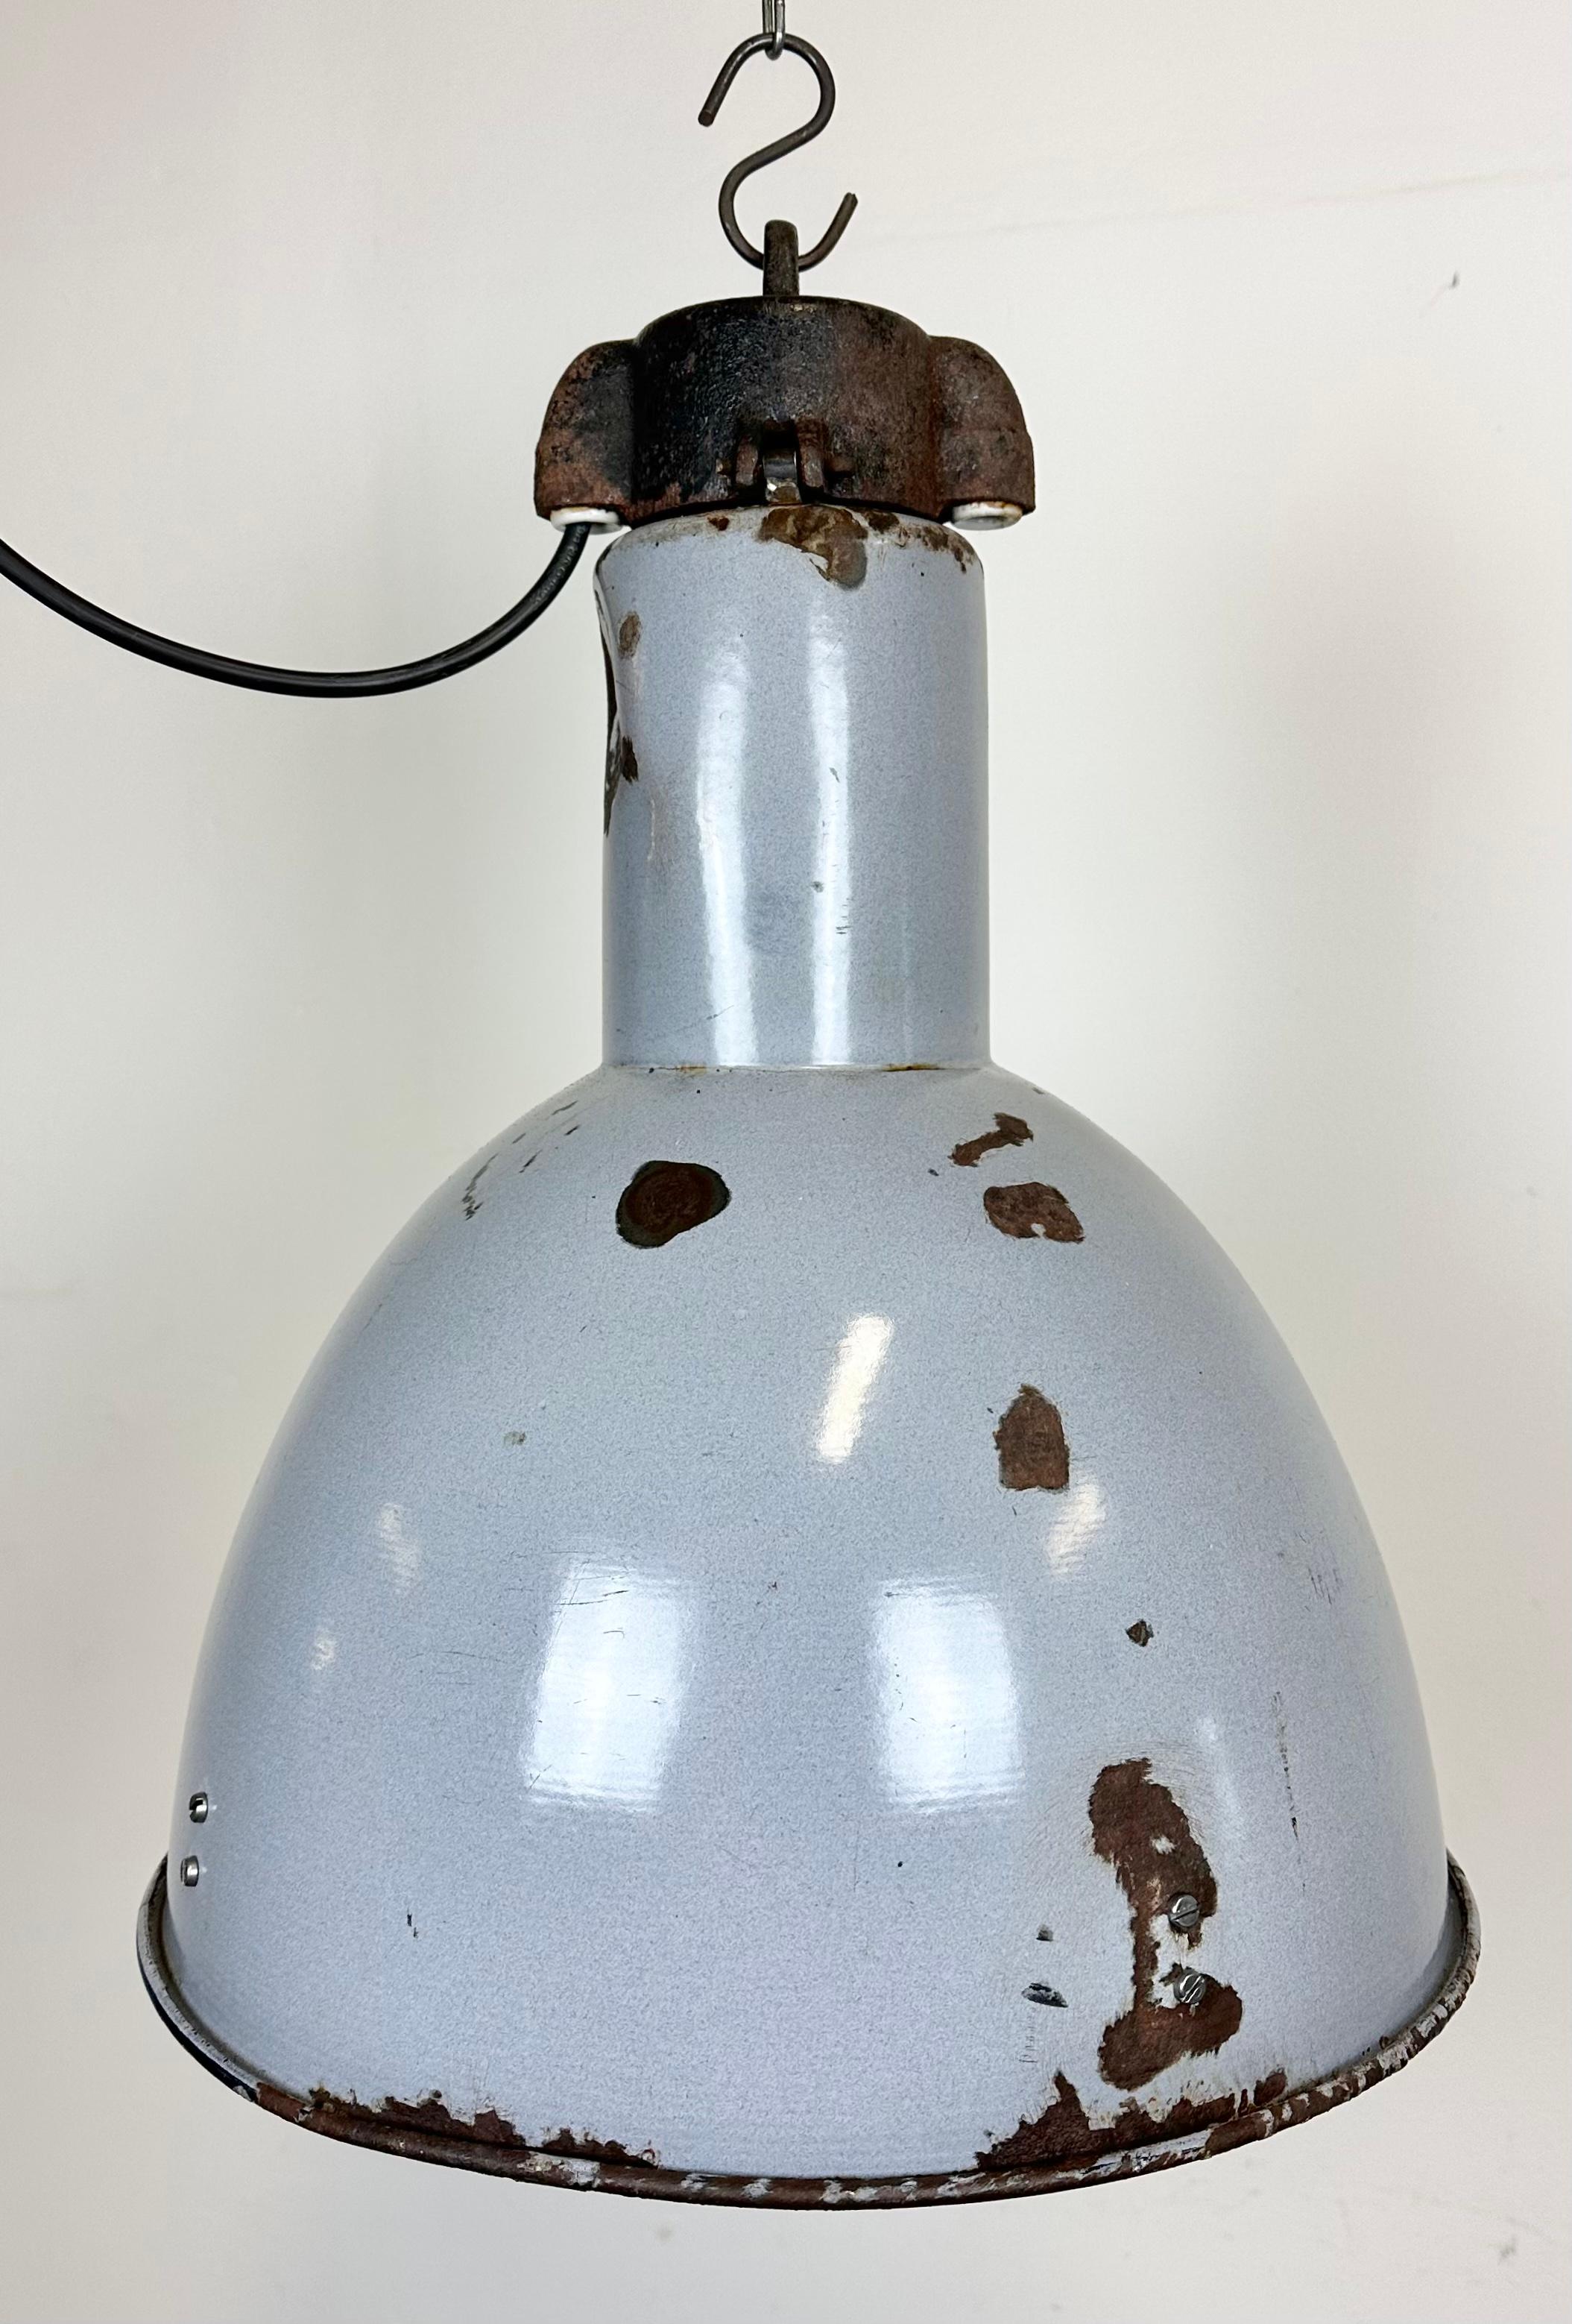 Czech Bauhaus Grey Enamel Industrial Pendant Lamp, 1950s For Sale